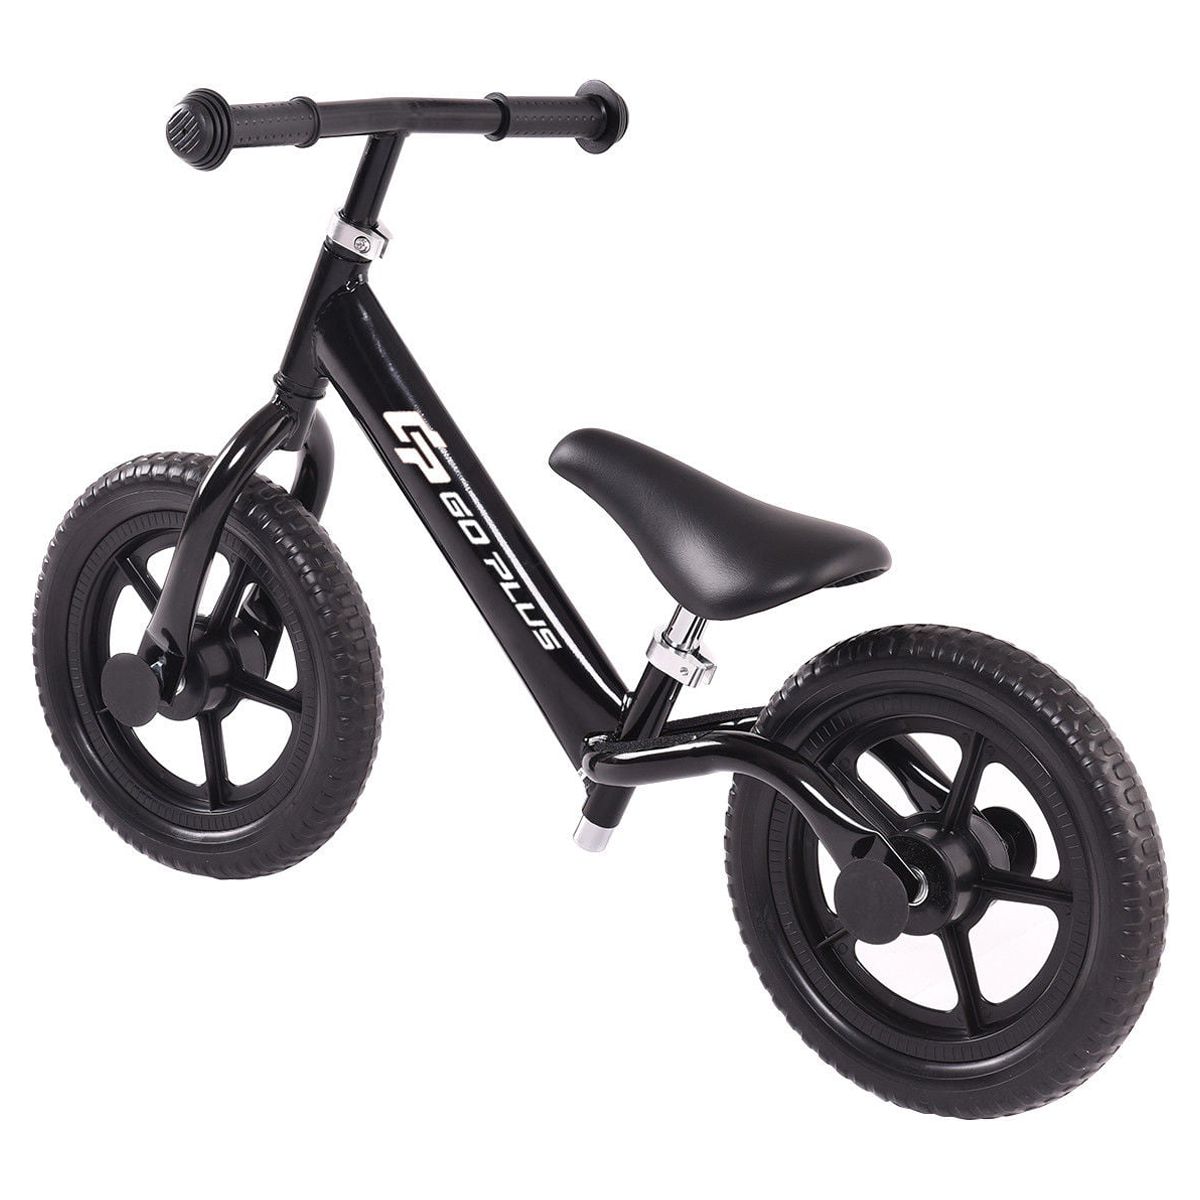 Goplus 12'' Balance Bike Classic Kids No-Pedal Learn To Ride Pre Bike w/ Adjustable Seat, Black - image 4 of 8